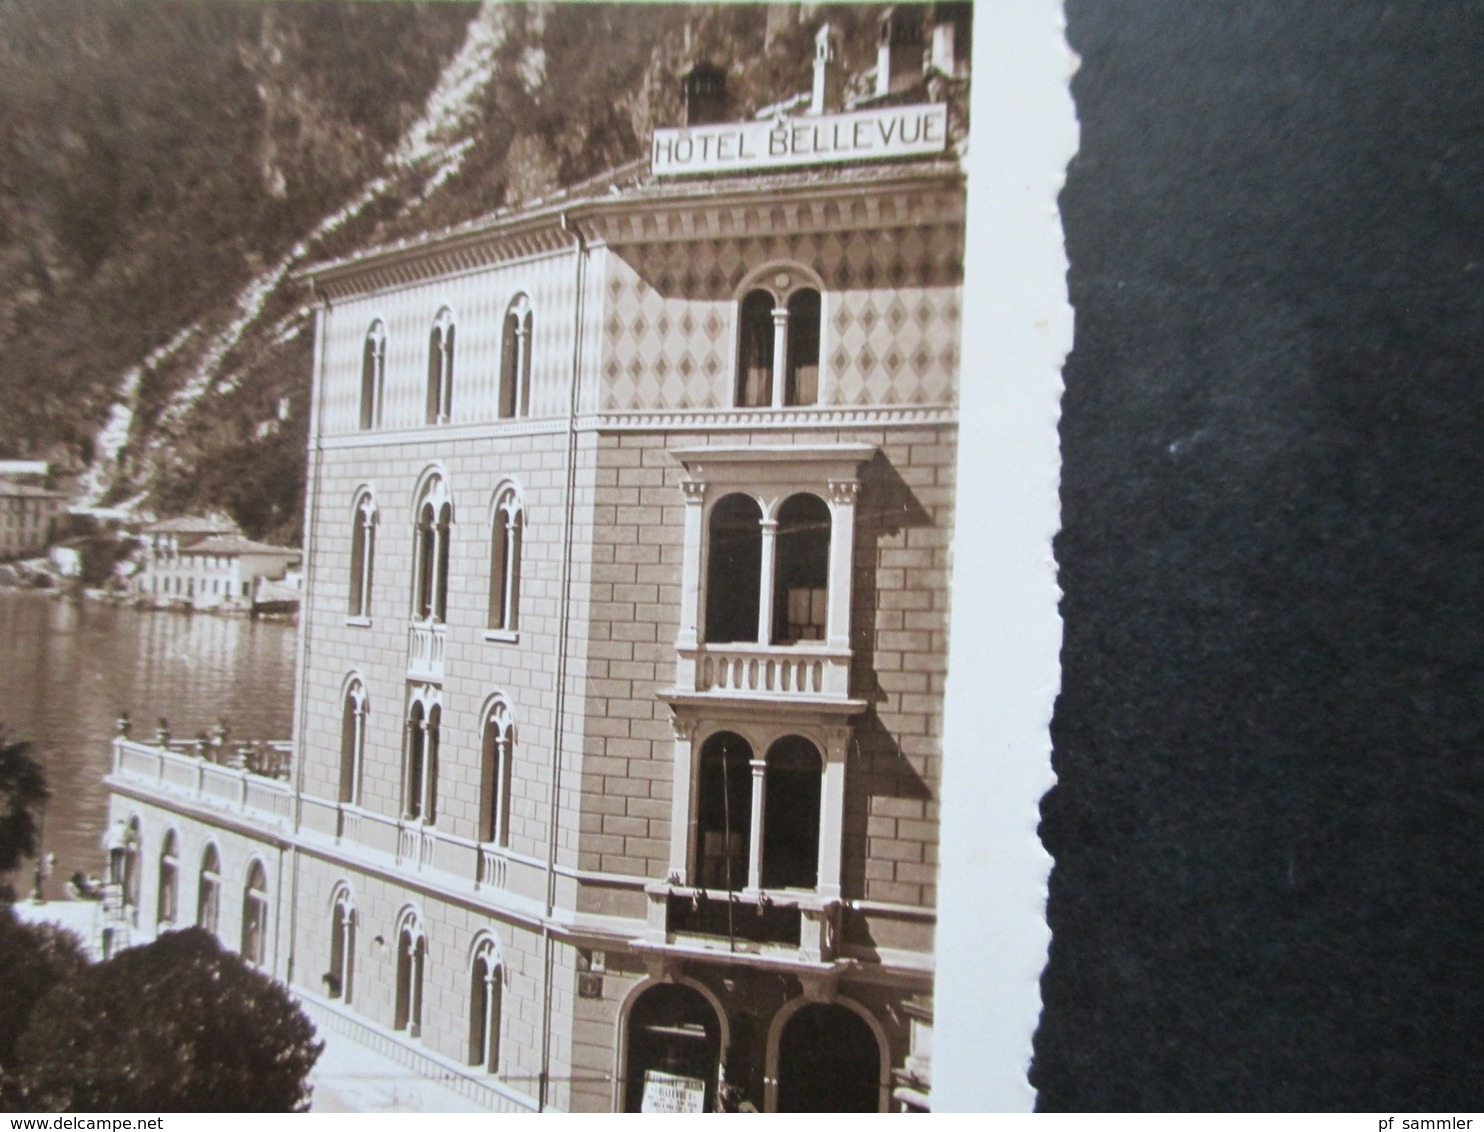 Echtfoto AK Italien 1934 Riva Giardini Caducci Mit Hotel Bellevue Bildseitig Frankiert! - Hotel's & Restaurants